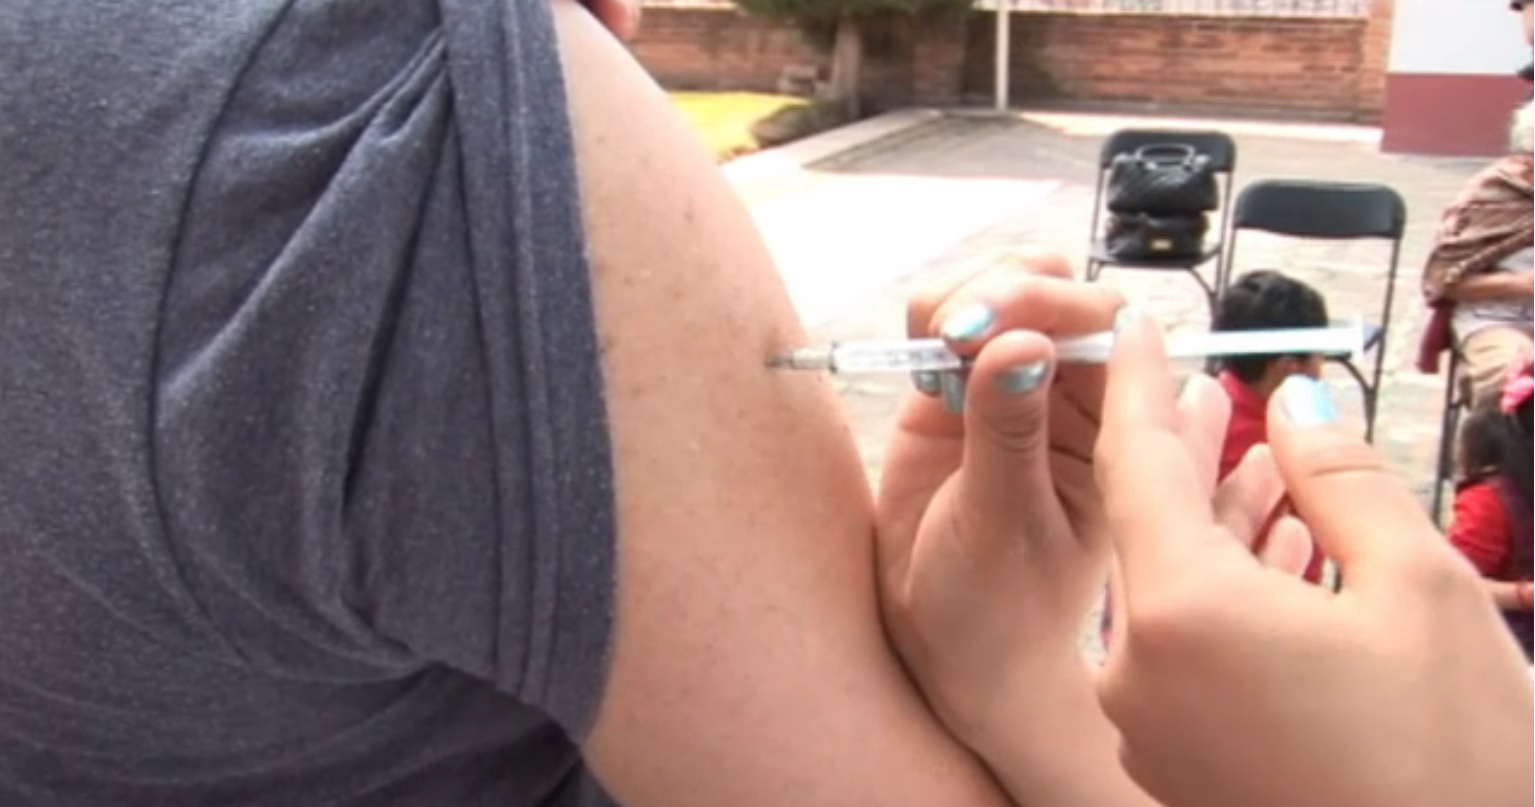 Aplican una vacuna contra el papiloma humano a joven